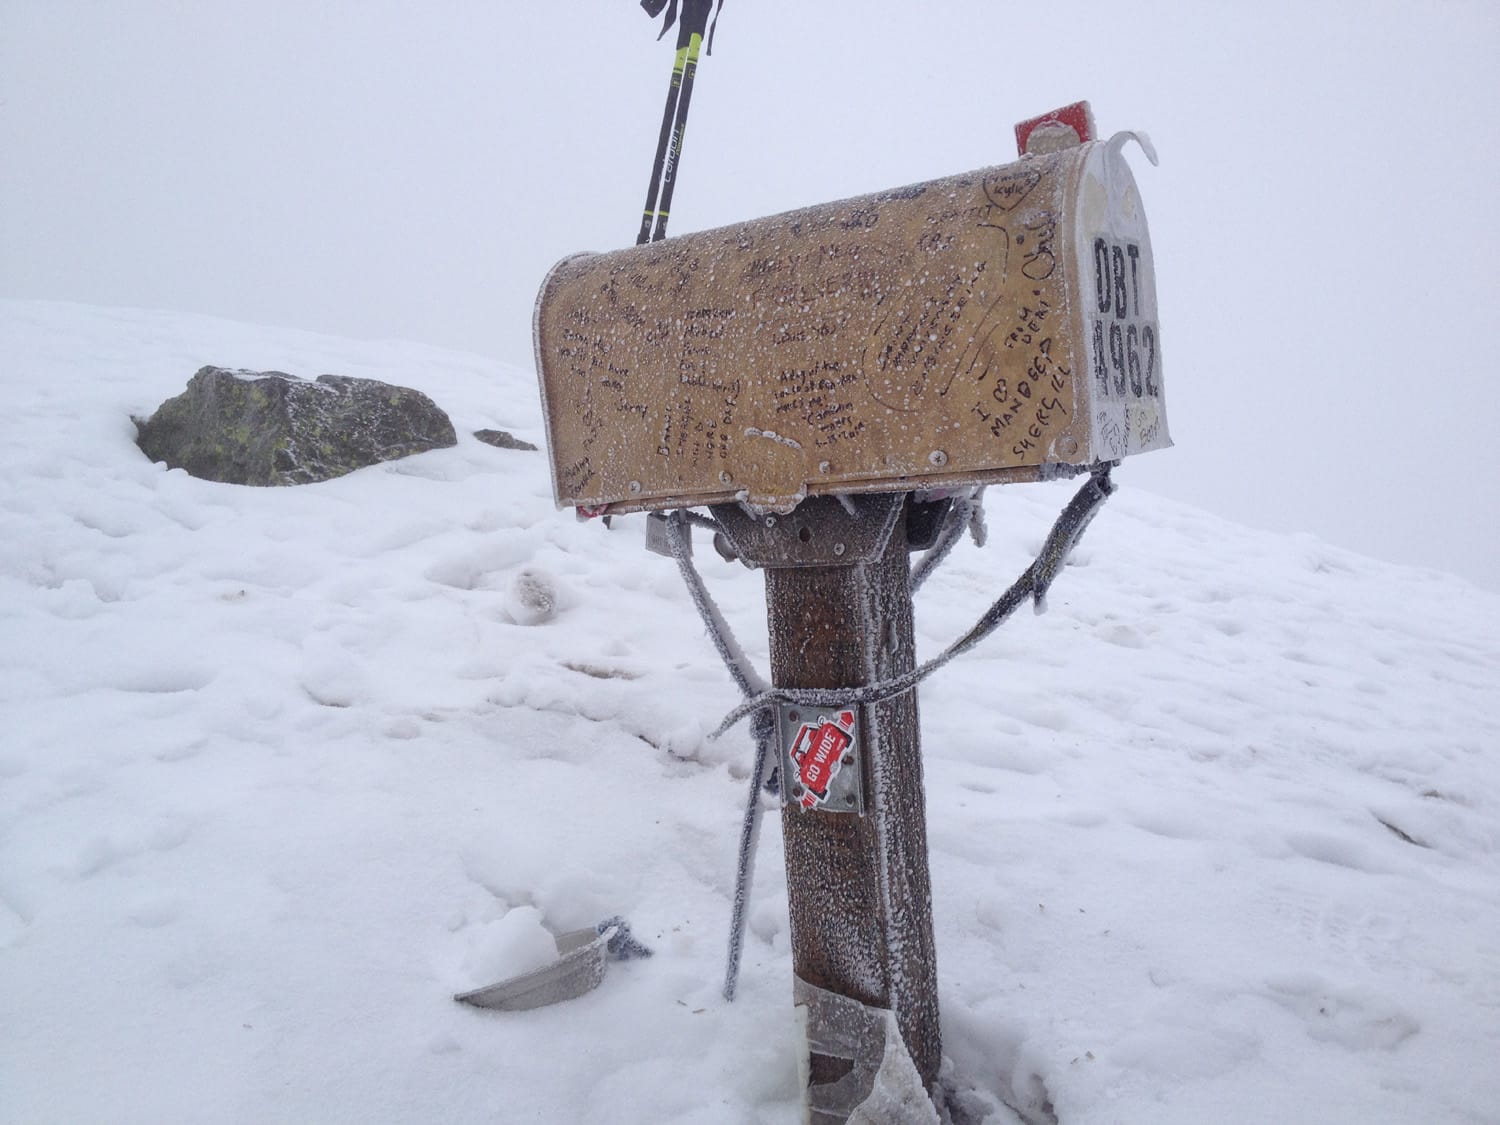 Mailbox Peak Trail (WA)